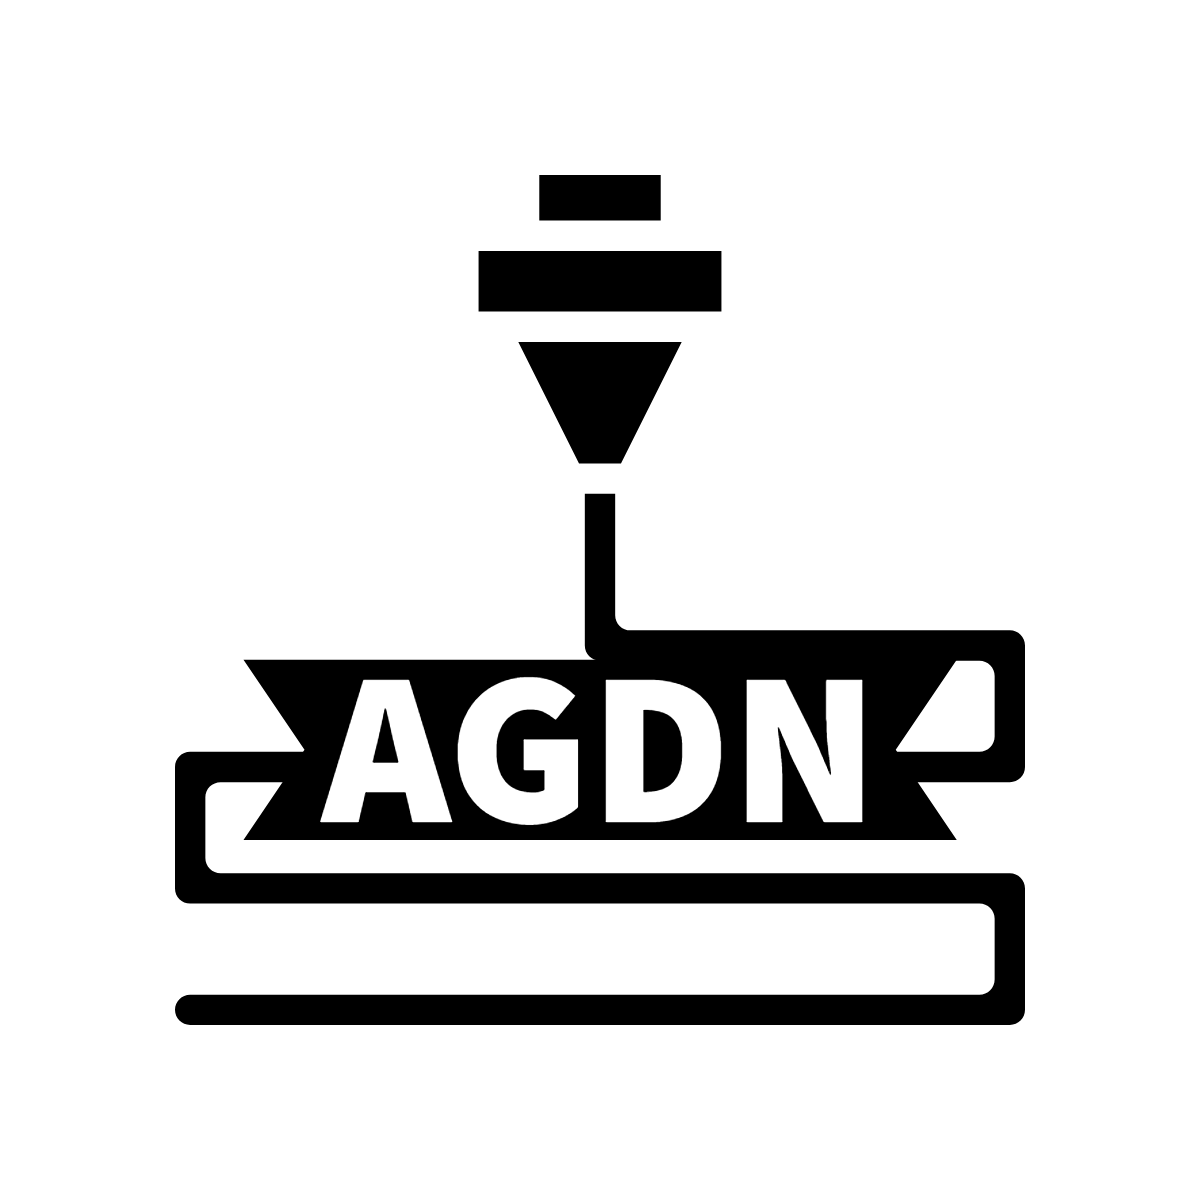 AGDN Prints